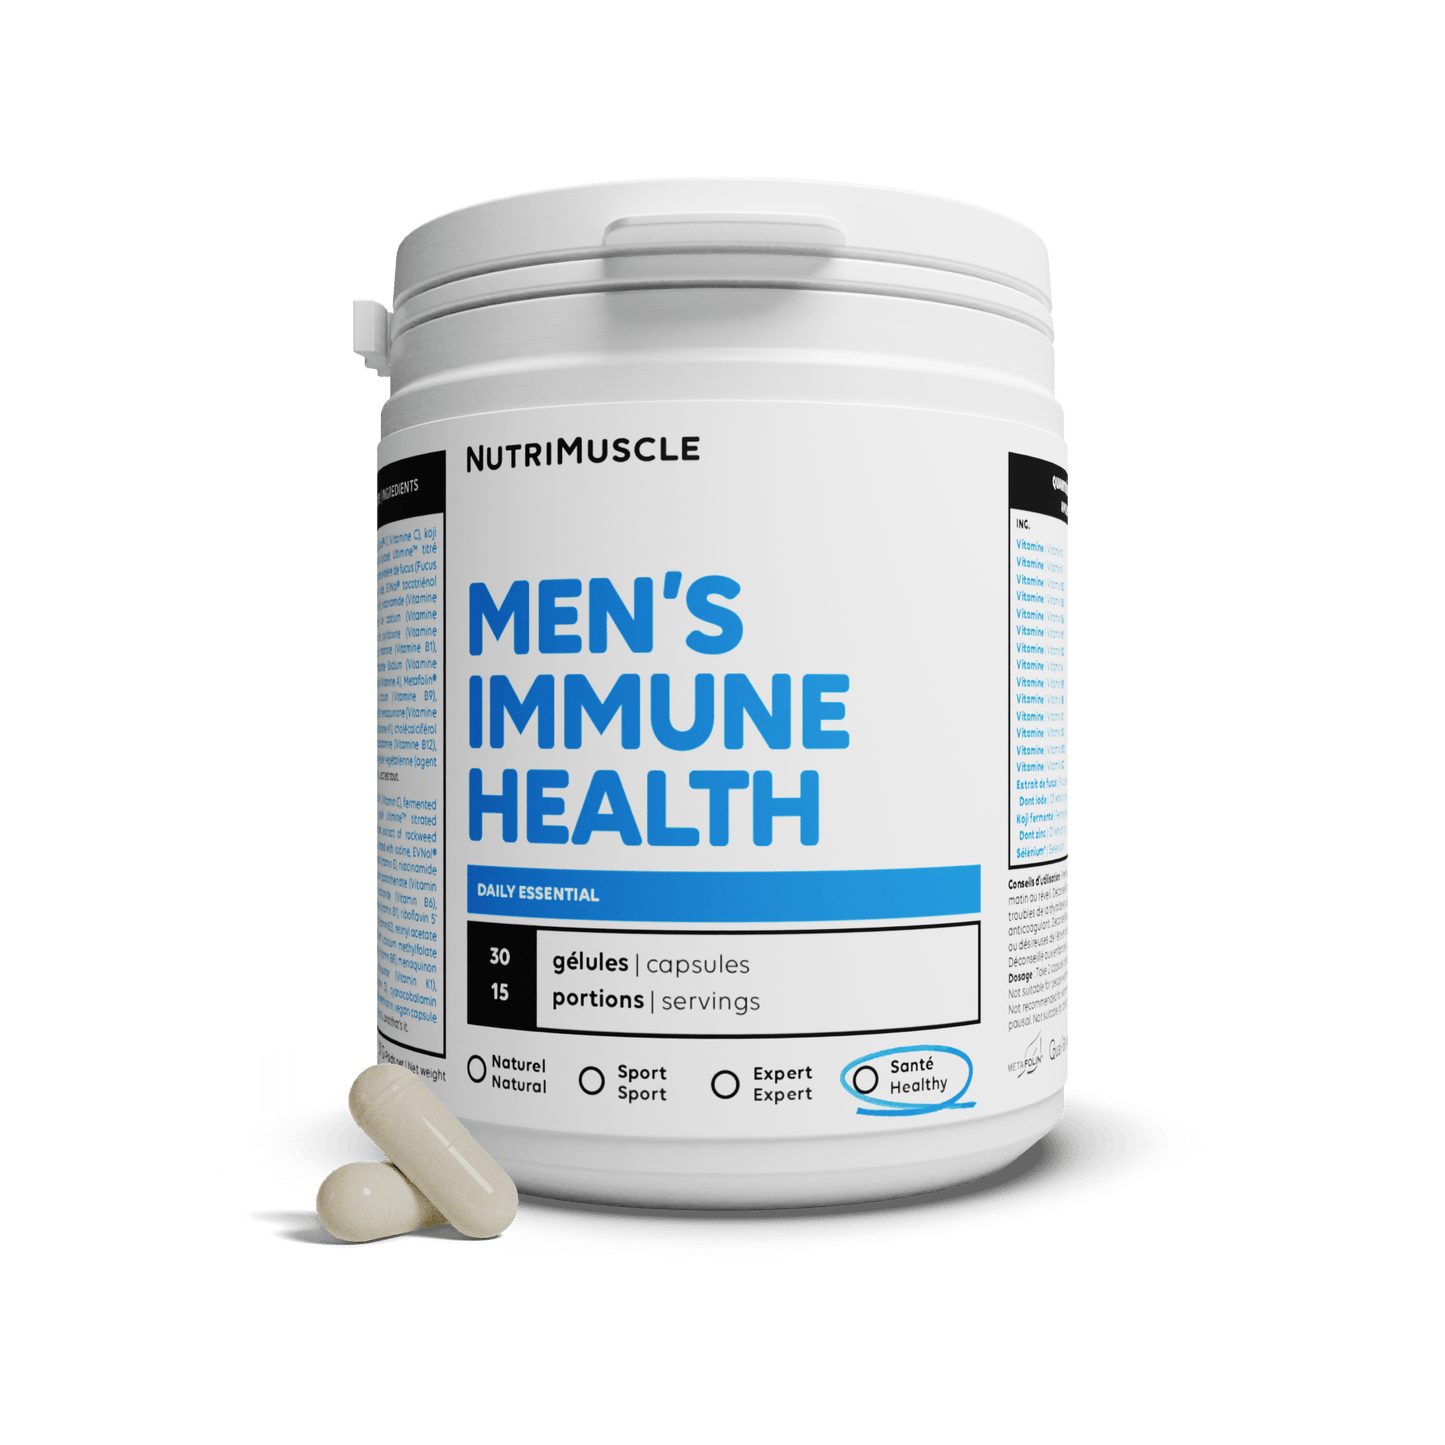 Nutrimuscle Vitamines 30 gélules Men's Immune Health